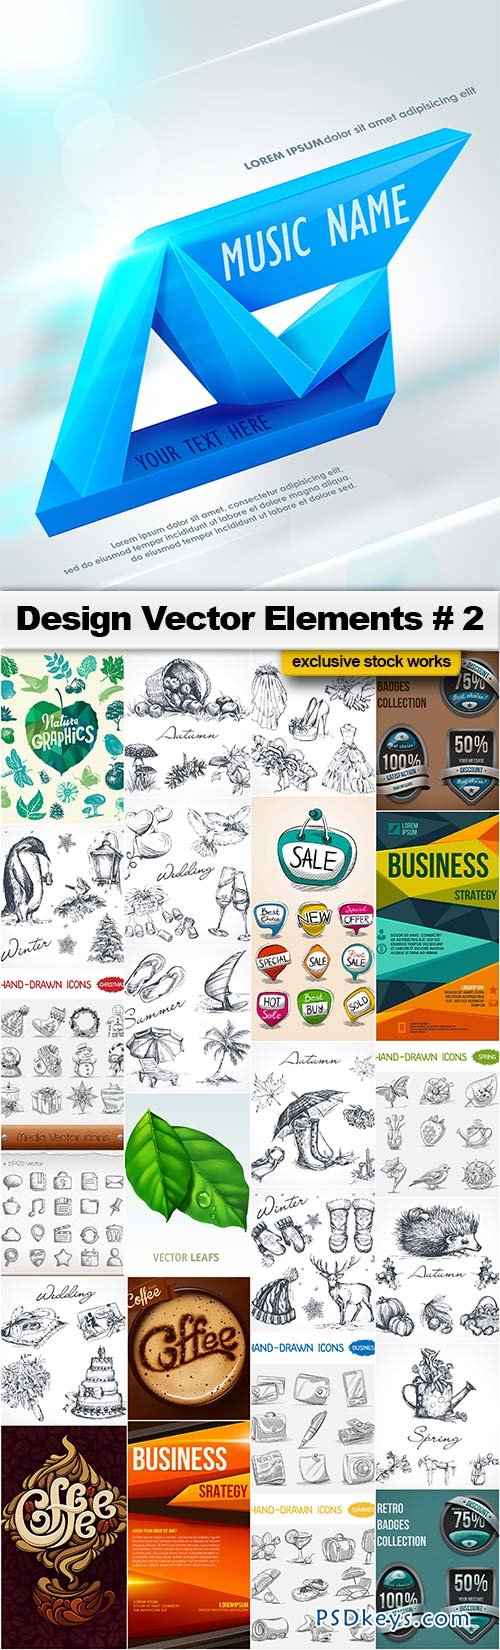 Design Vector Elements 2 - 25xEPS